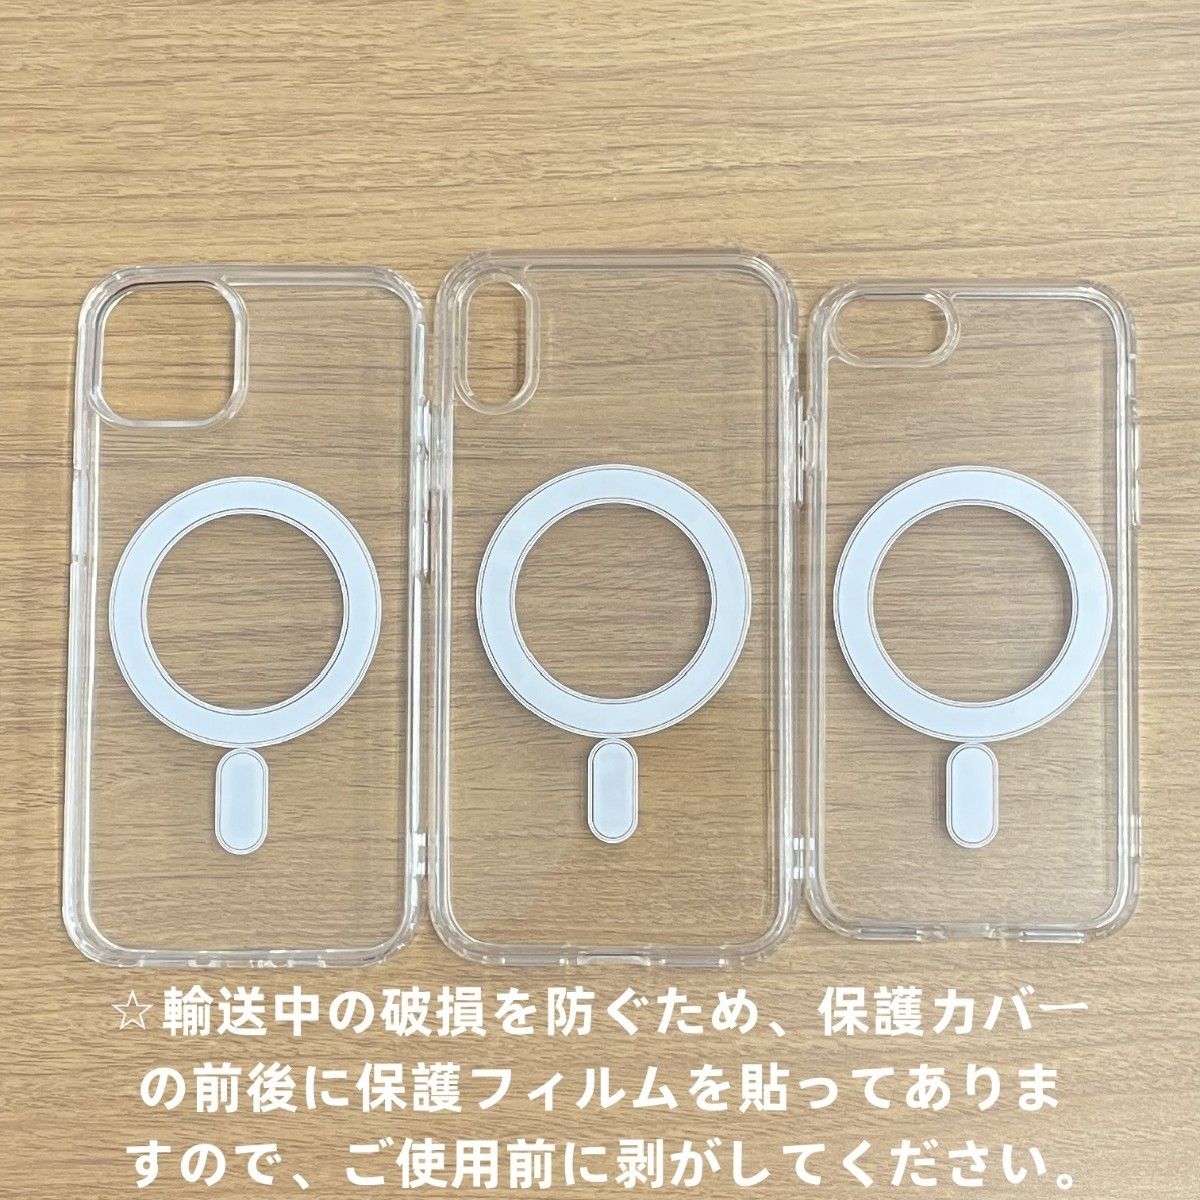 Magsafe充電器+電源アダプタ+ iPhone13mini クリアケースu